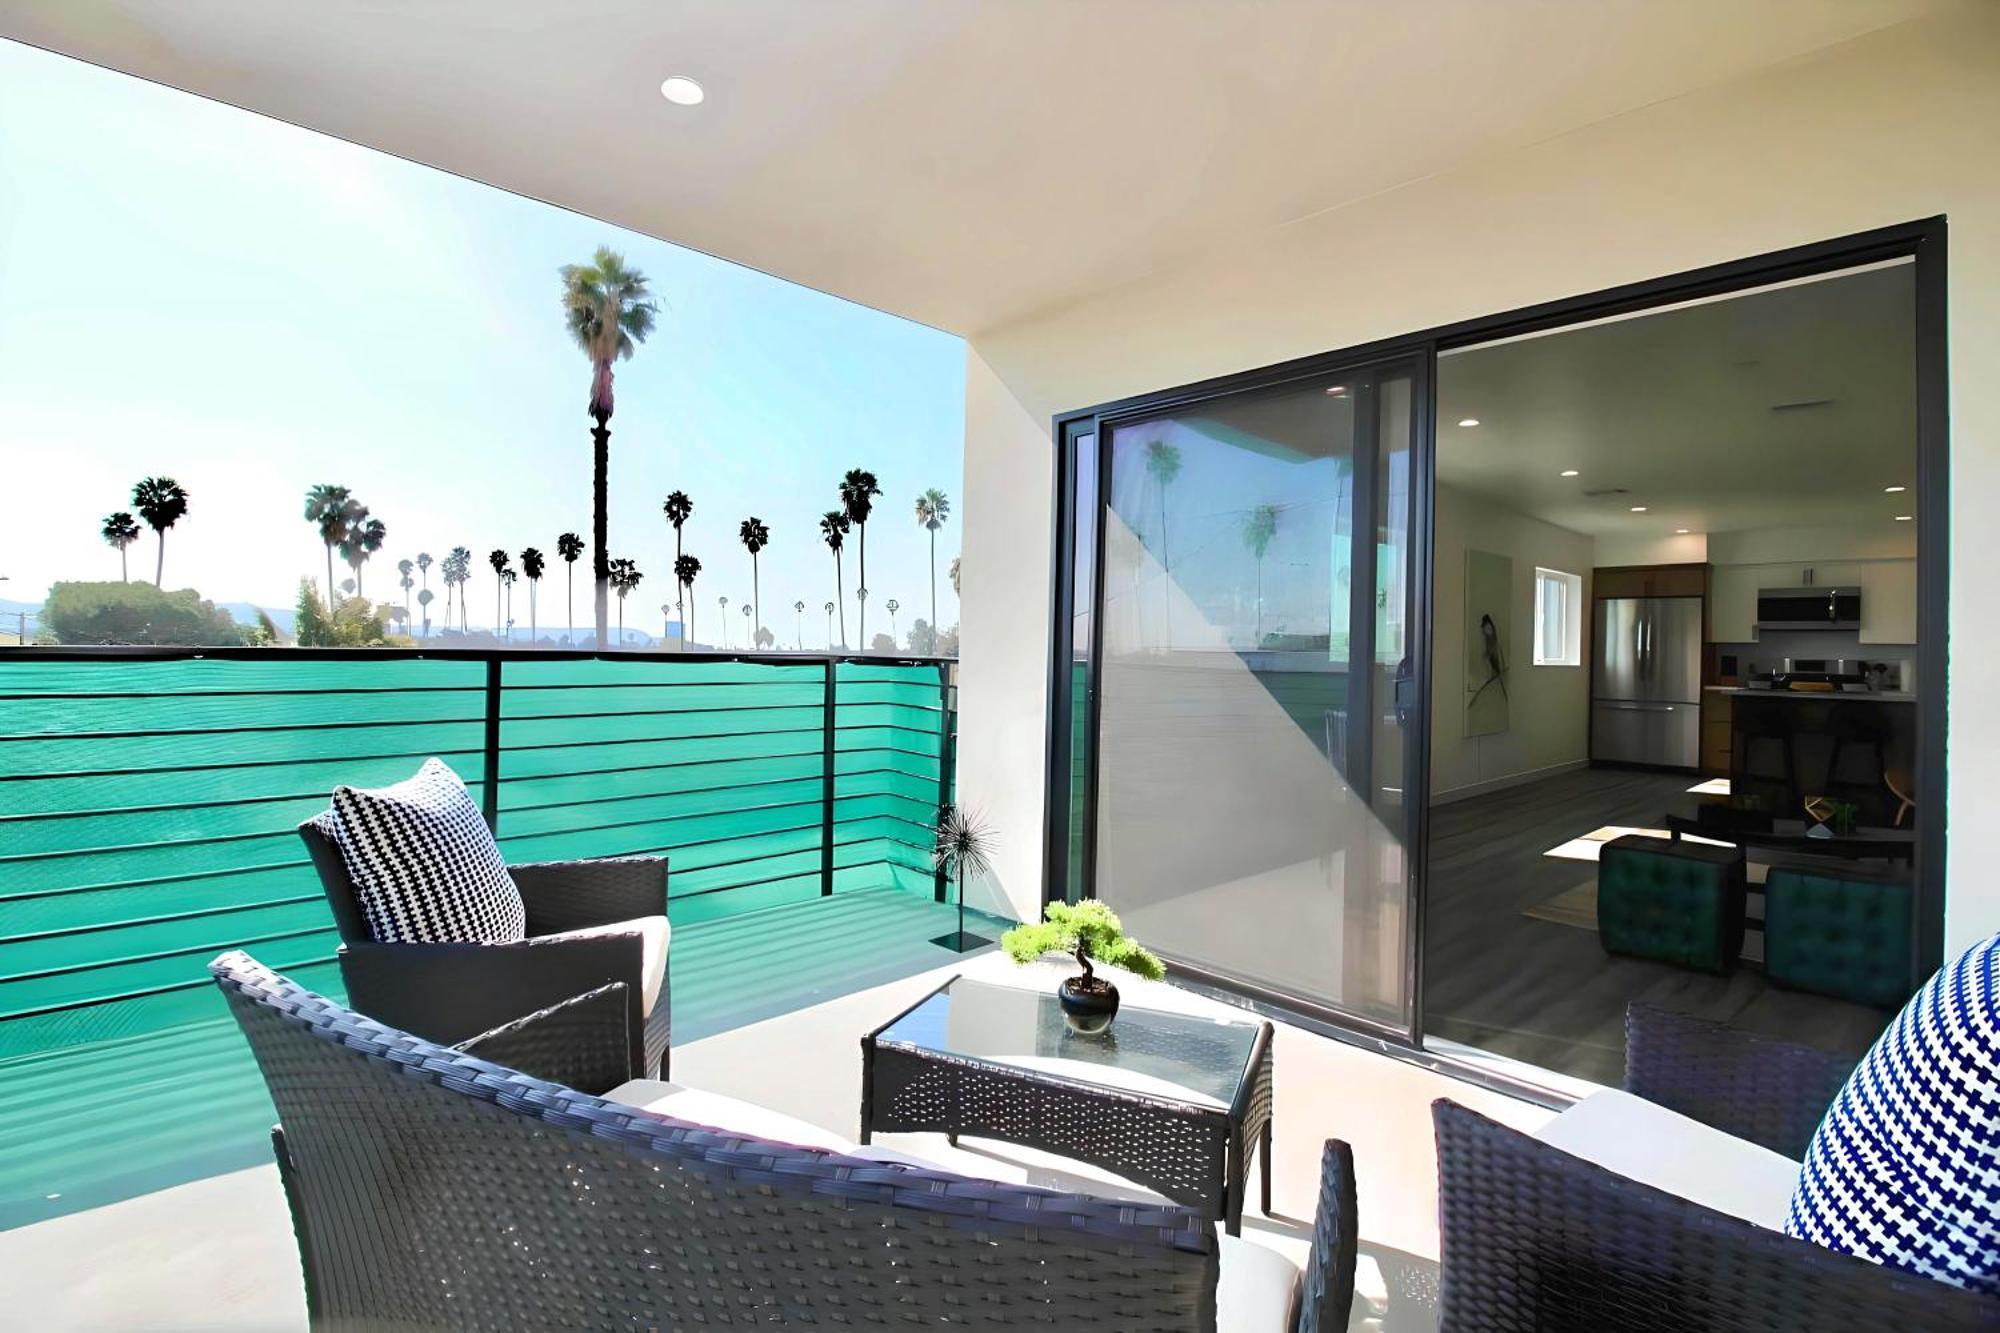 Los Angeles 3Br Villa Suites With Free Parking エクステリア 写真